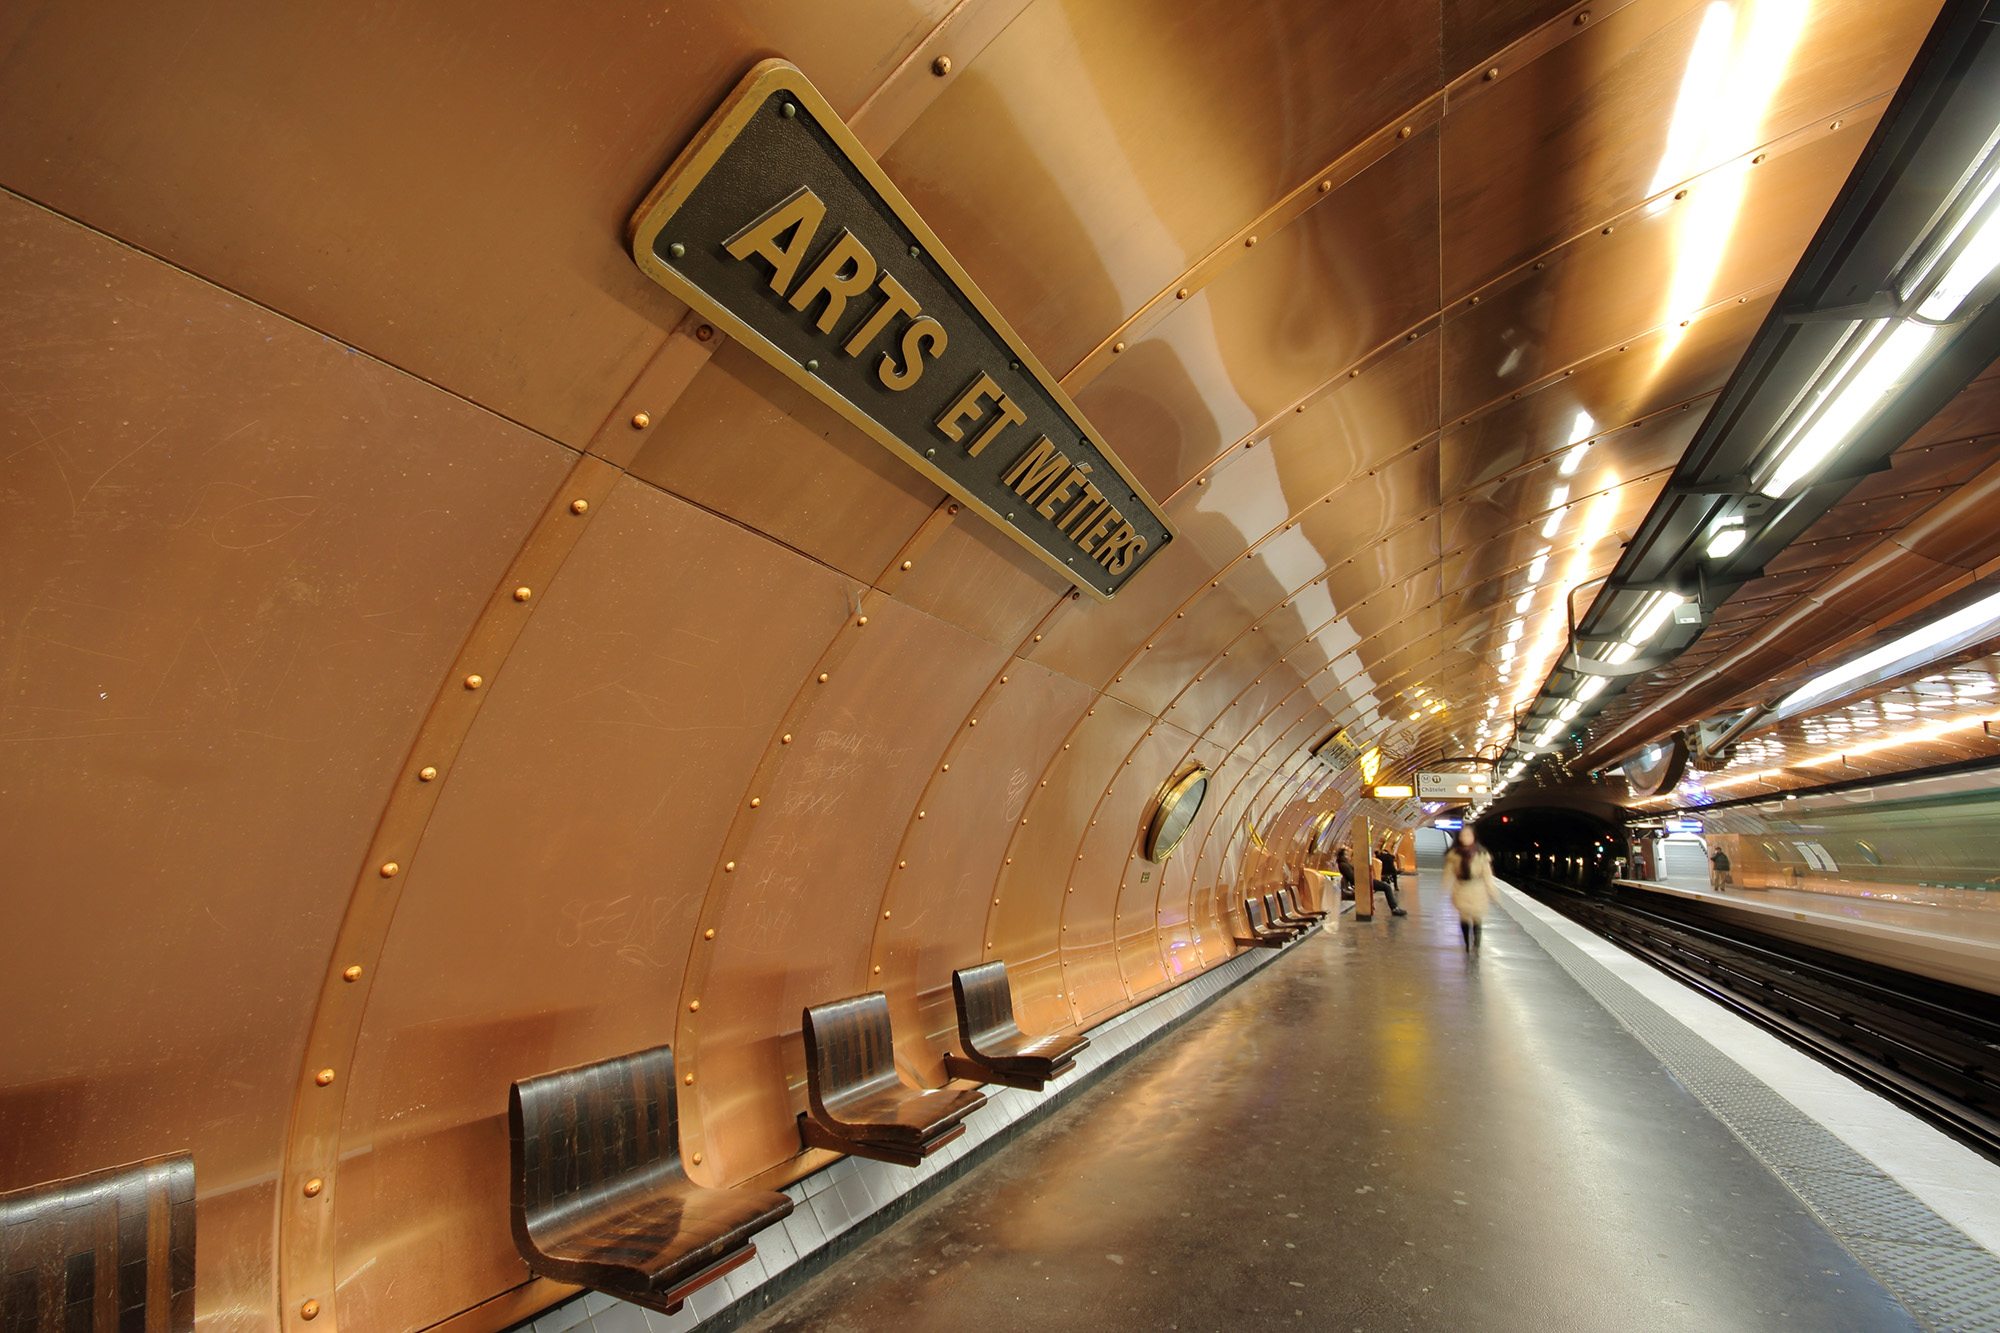 Включи крутую станцию. Станция метро Arts et metiers. Станция «Arts et metiers» Париж. Arts et métiers, Париж метро. Станция ар-э-Метье Париж Франция.